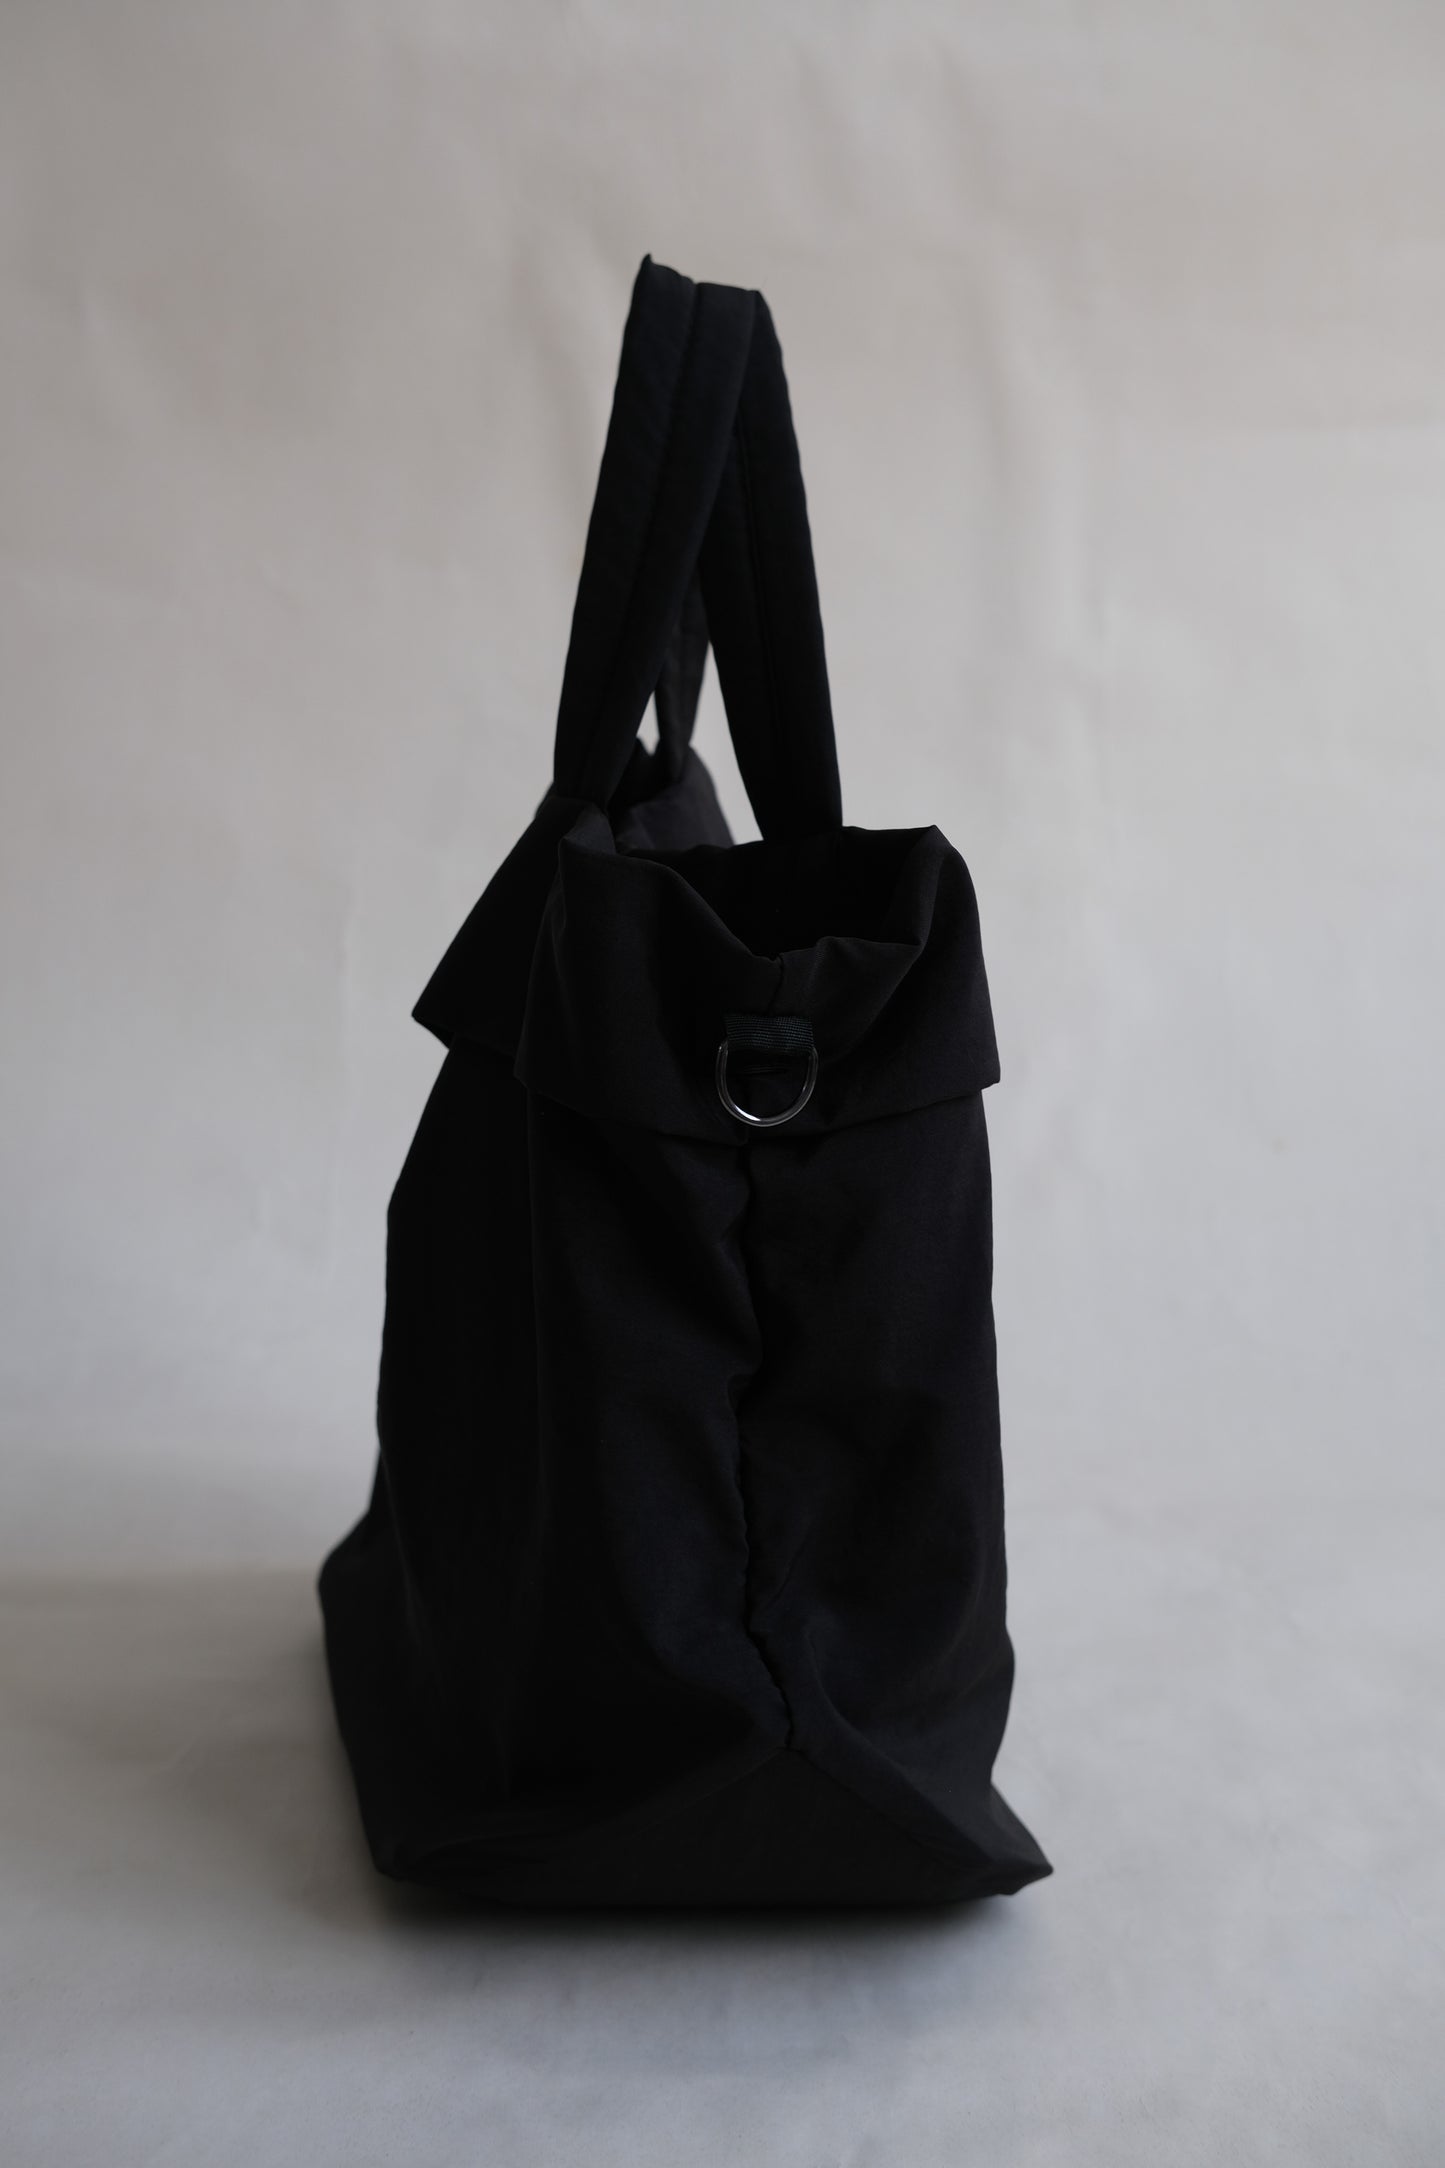 Casual nylon shoulder handbag in classic black